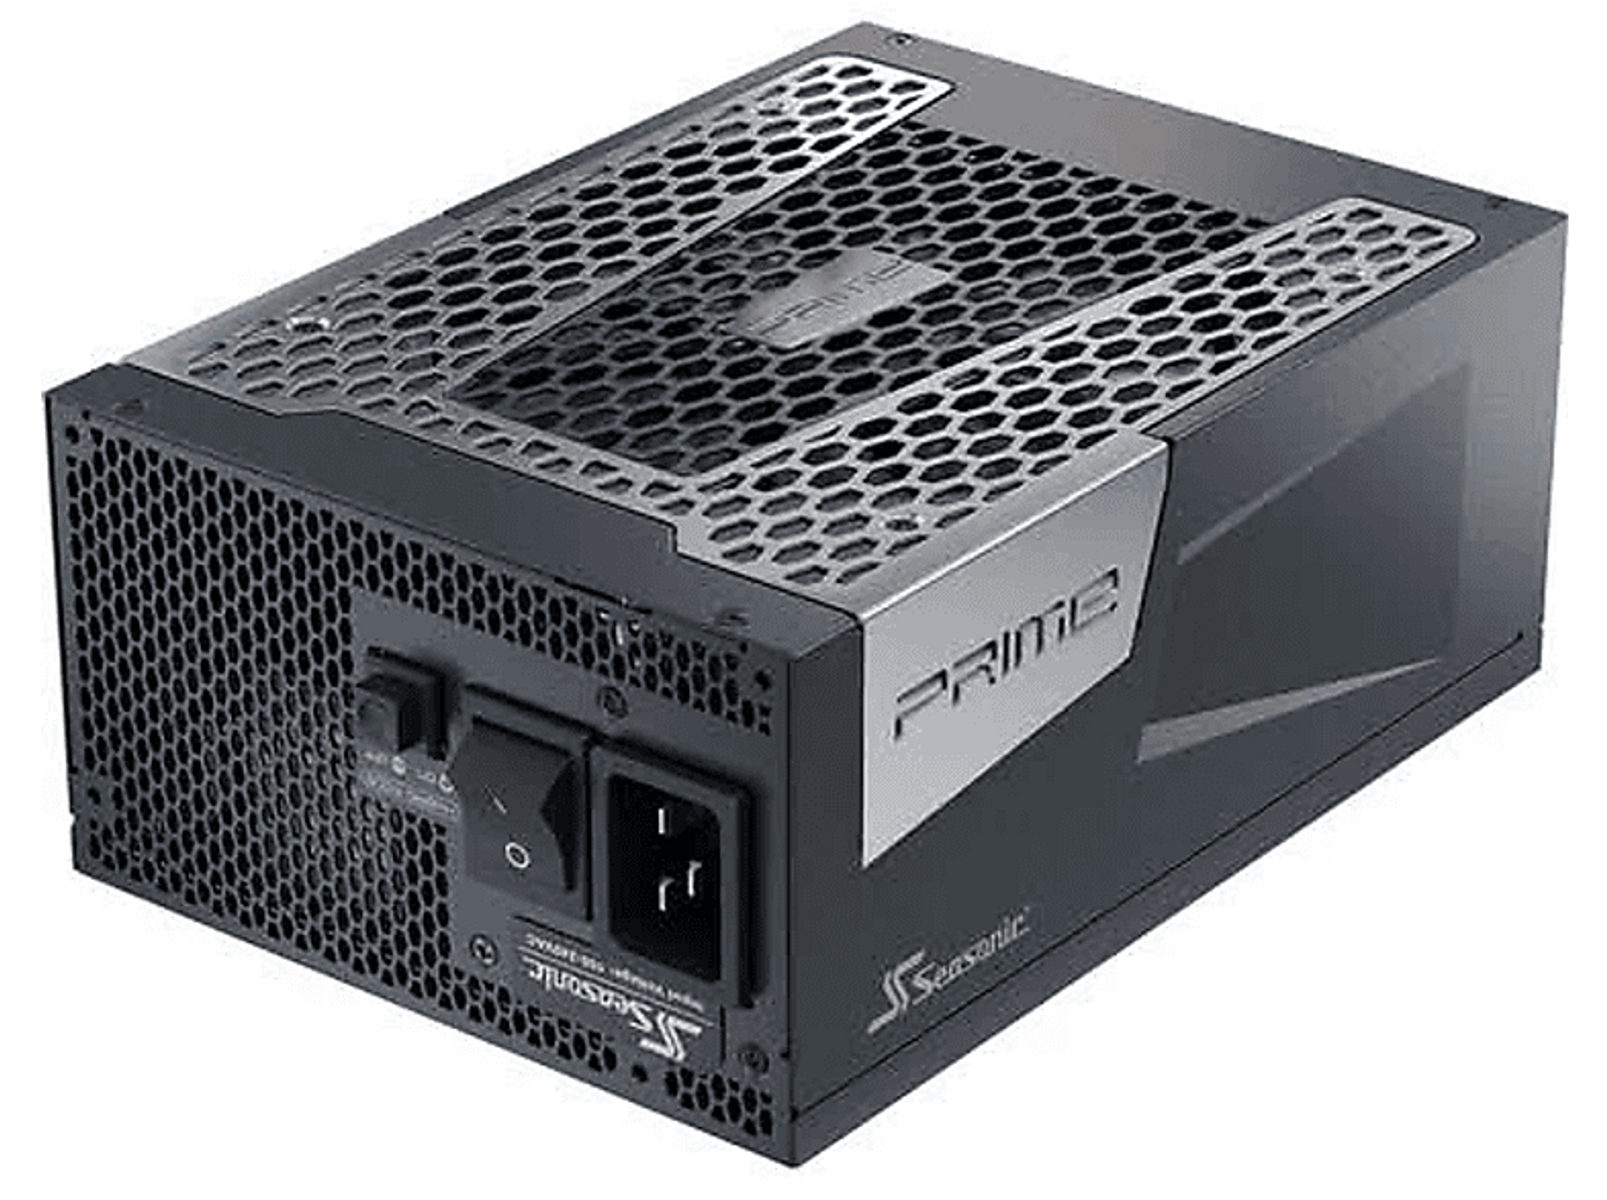 PC SEASONIC 1600 ATX3-PRIME-PX-1600 Netzteil Watt